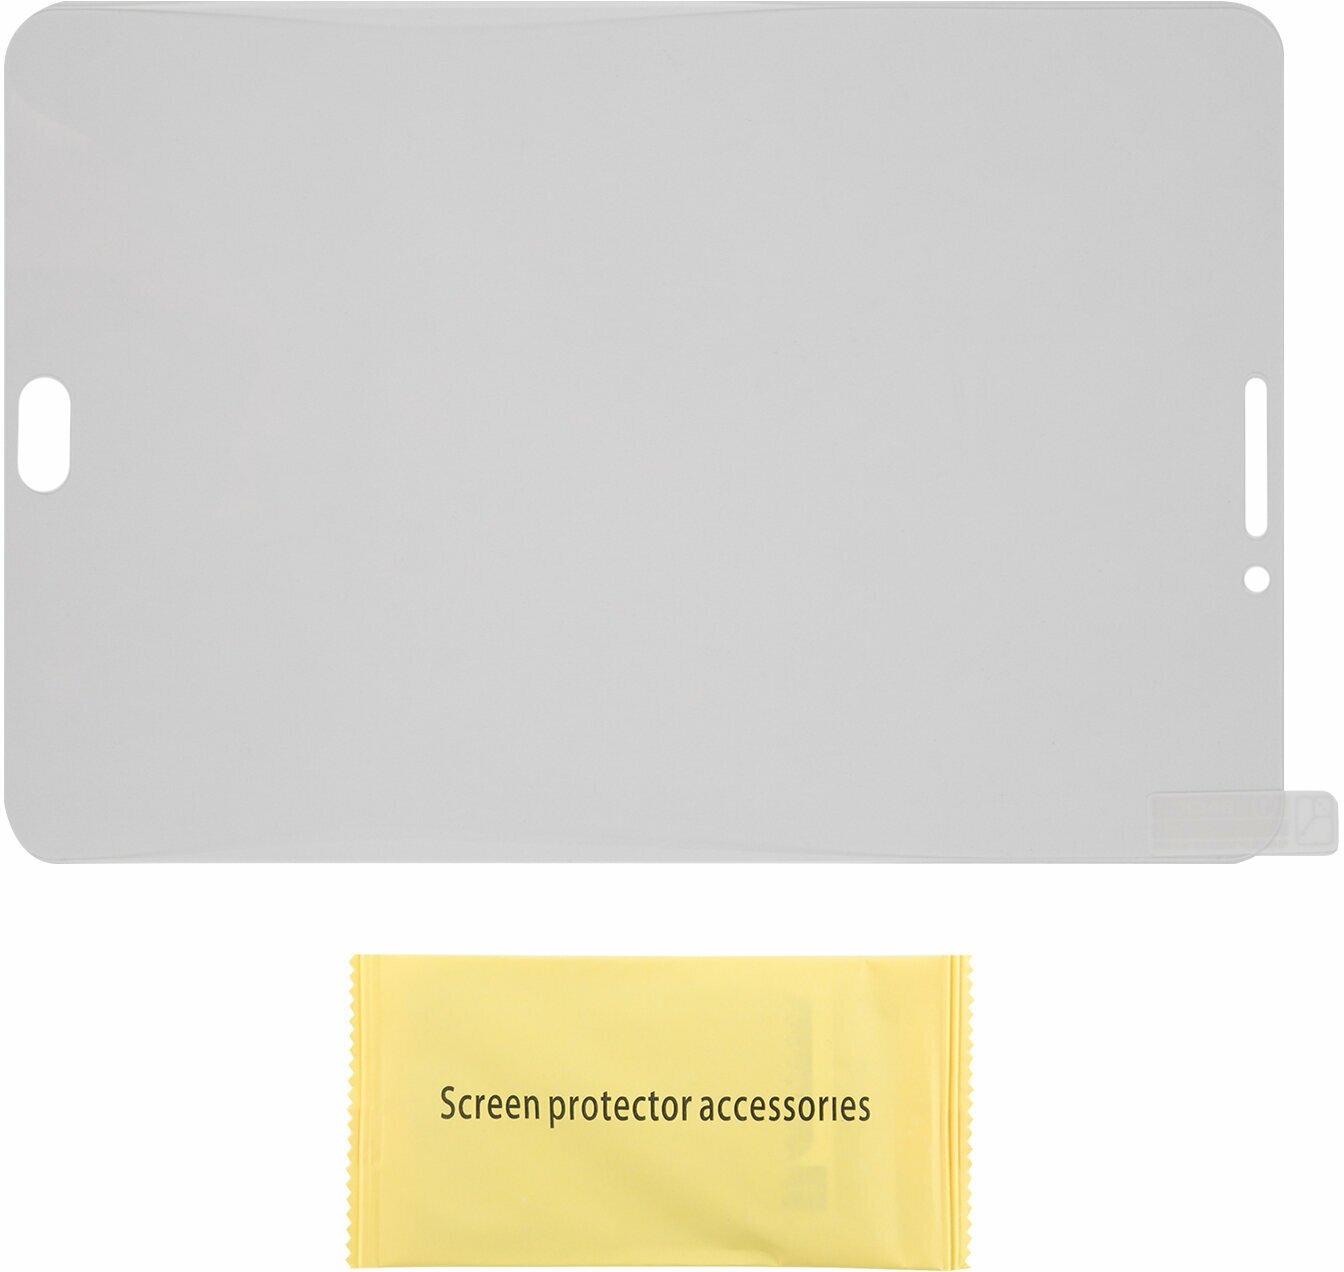 Защитное стекло Samsung Tab S2 T715 LTE 8" tempered glass/Защита от царапин Самсунг Таб С2 Т715 ЛТЕ 8"/Олеофобное покрытие/Без пузырей/Защитный экран